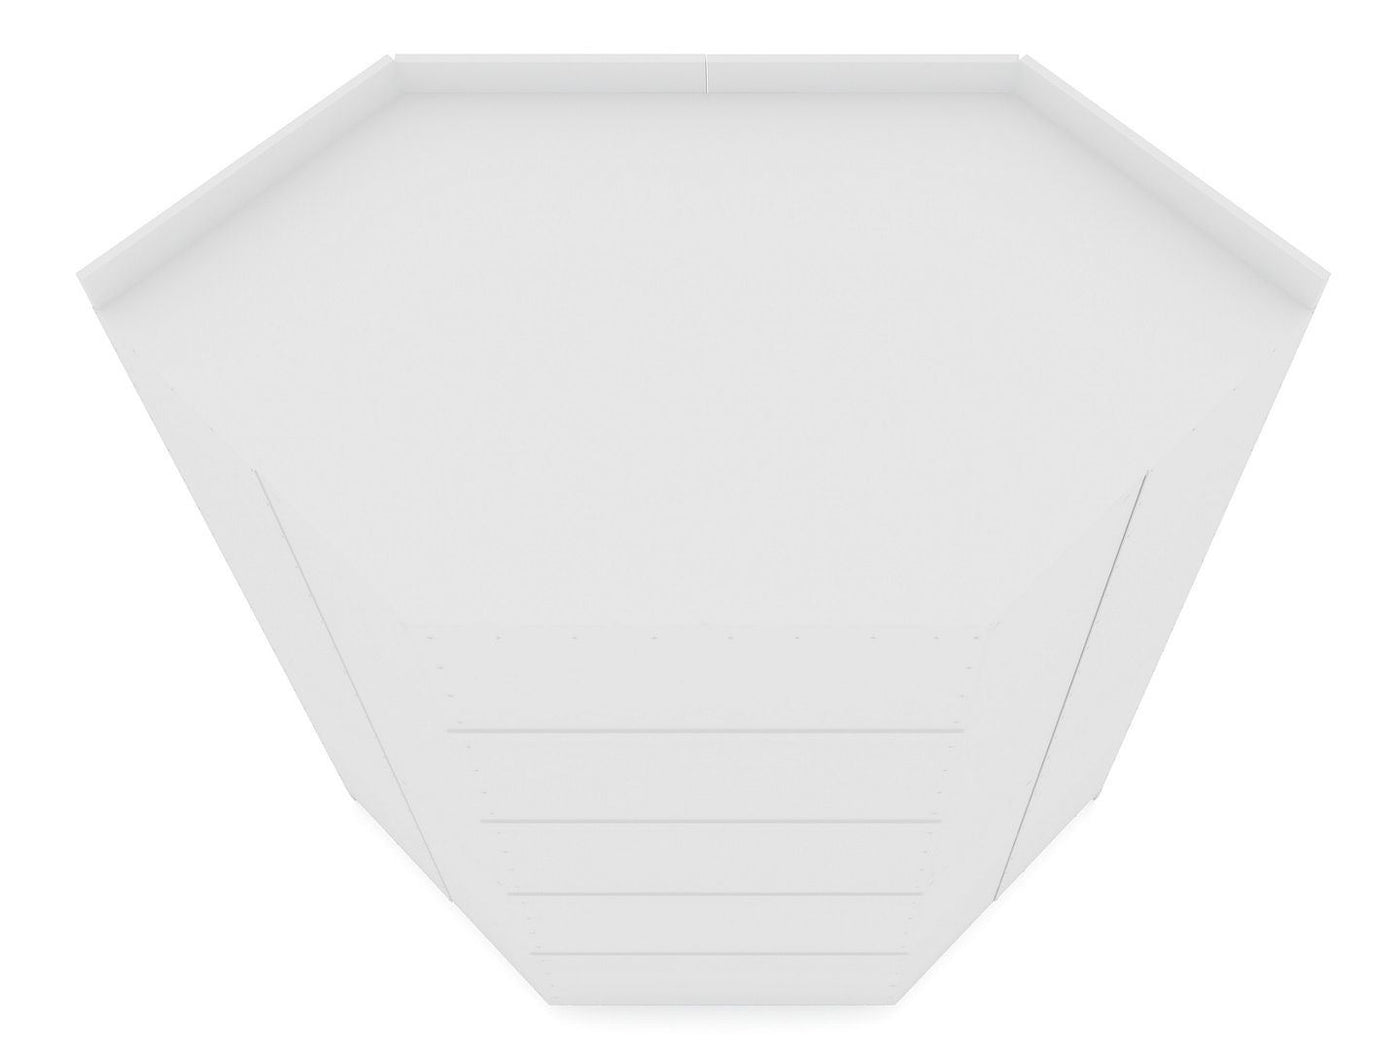 Oulu 2-Piece Modular Corner Wardrobe - White